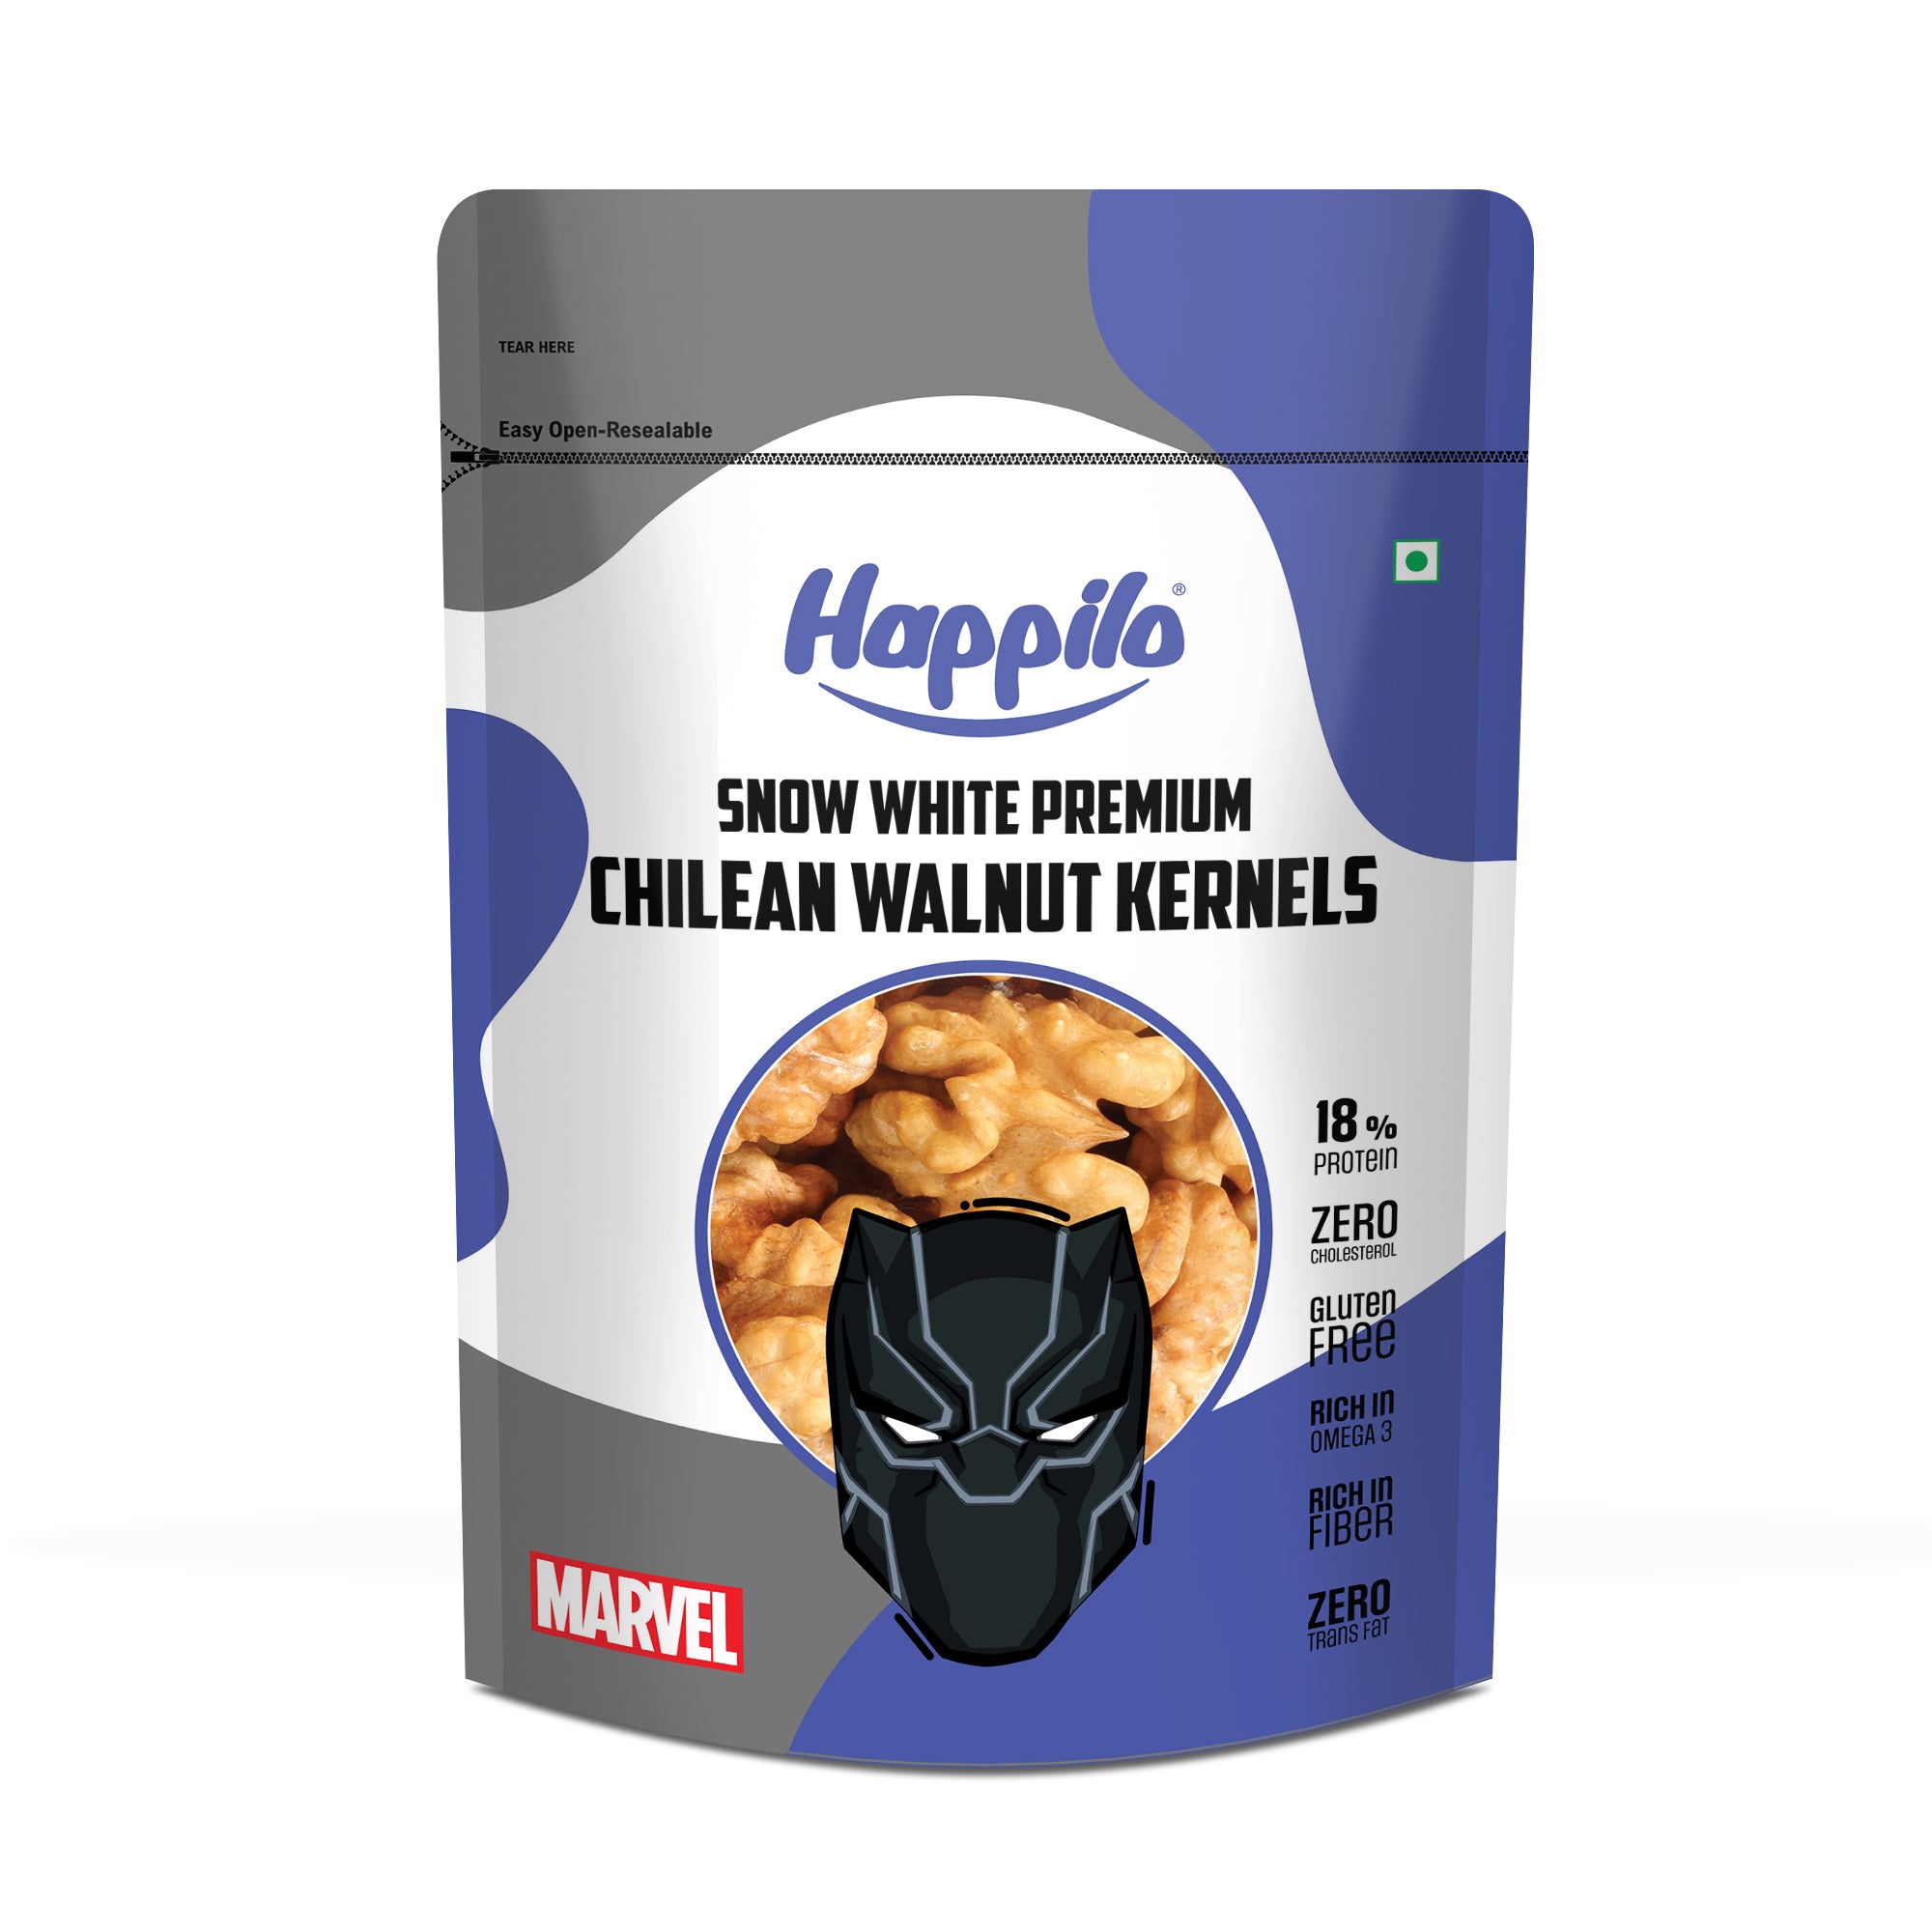 Black Panther Edition Chilean Walnut Kernels 200g